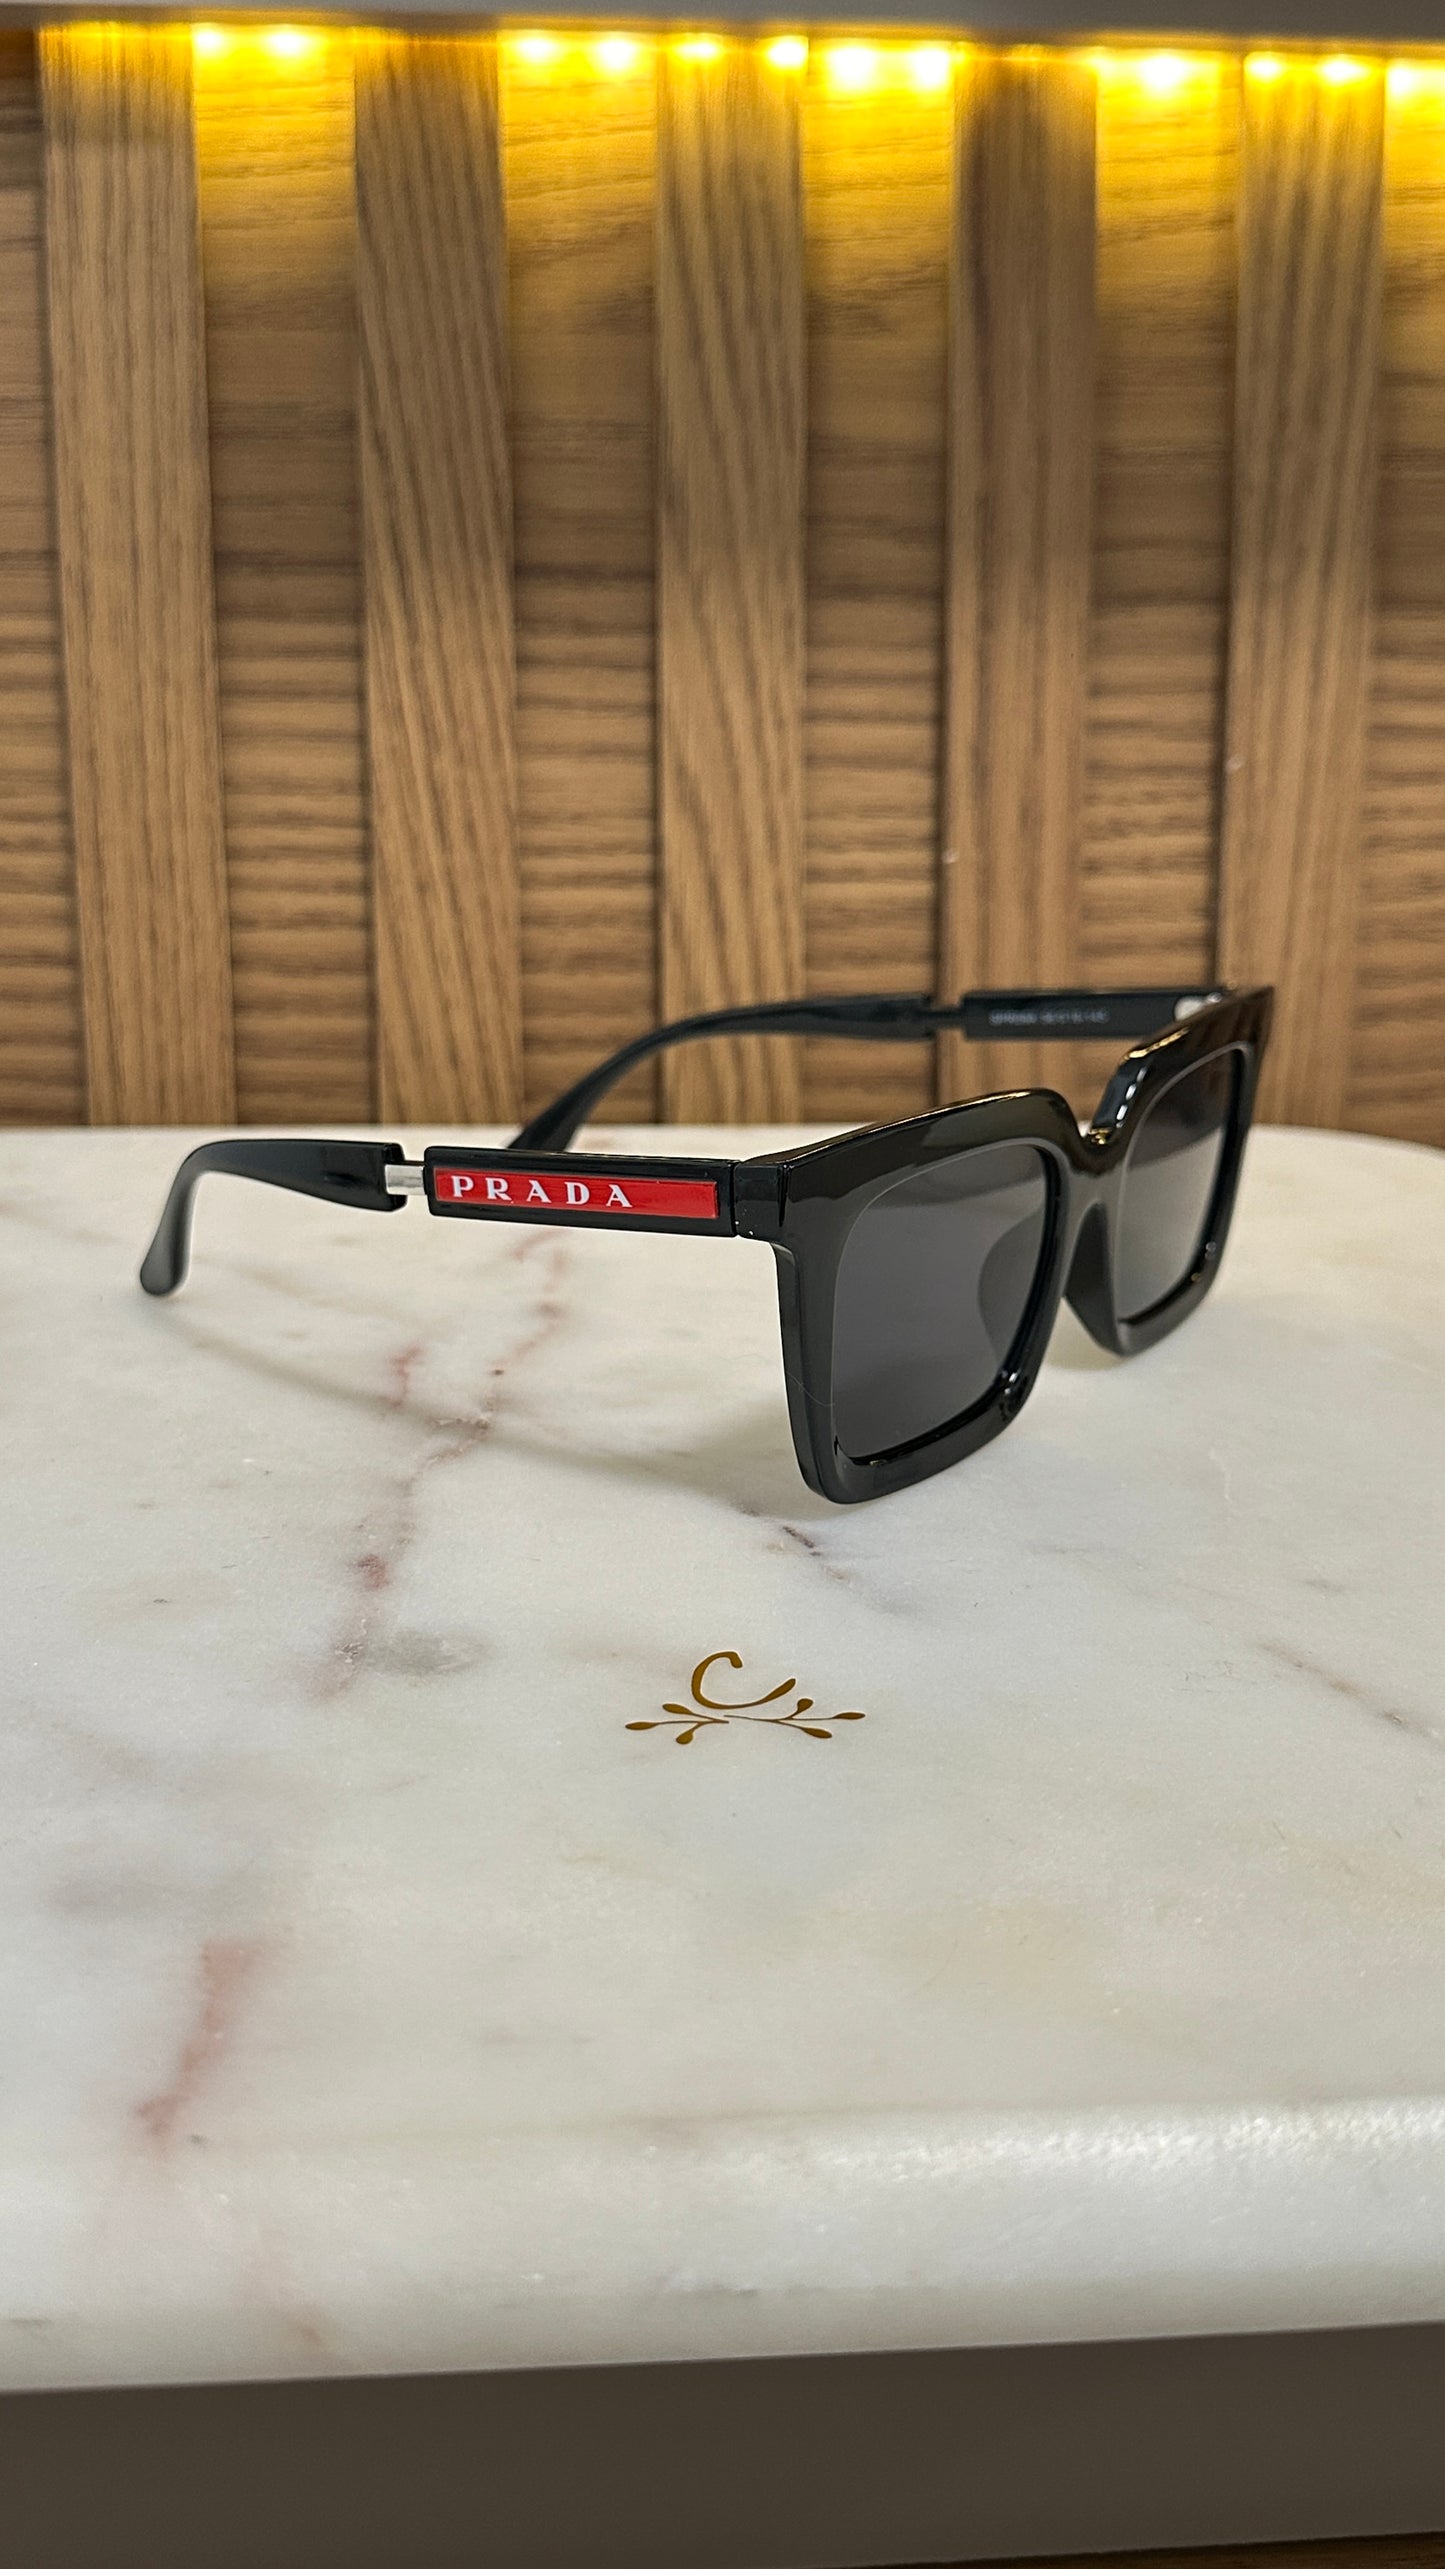 Sunglasses Ref 168